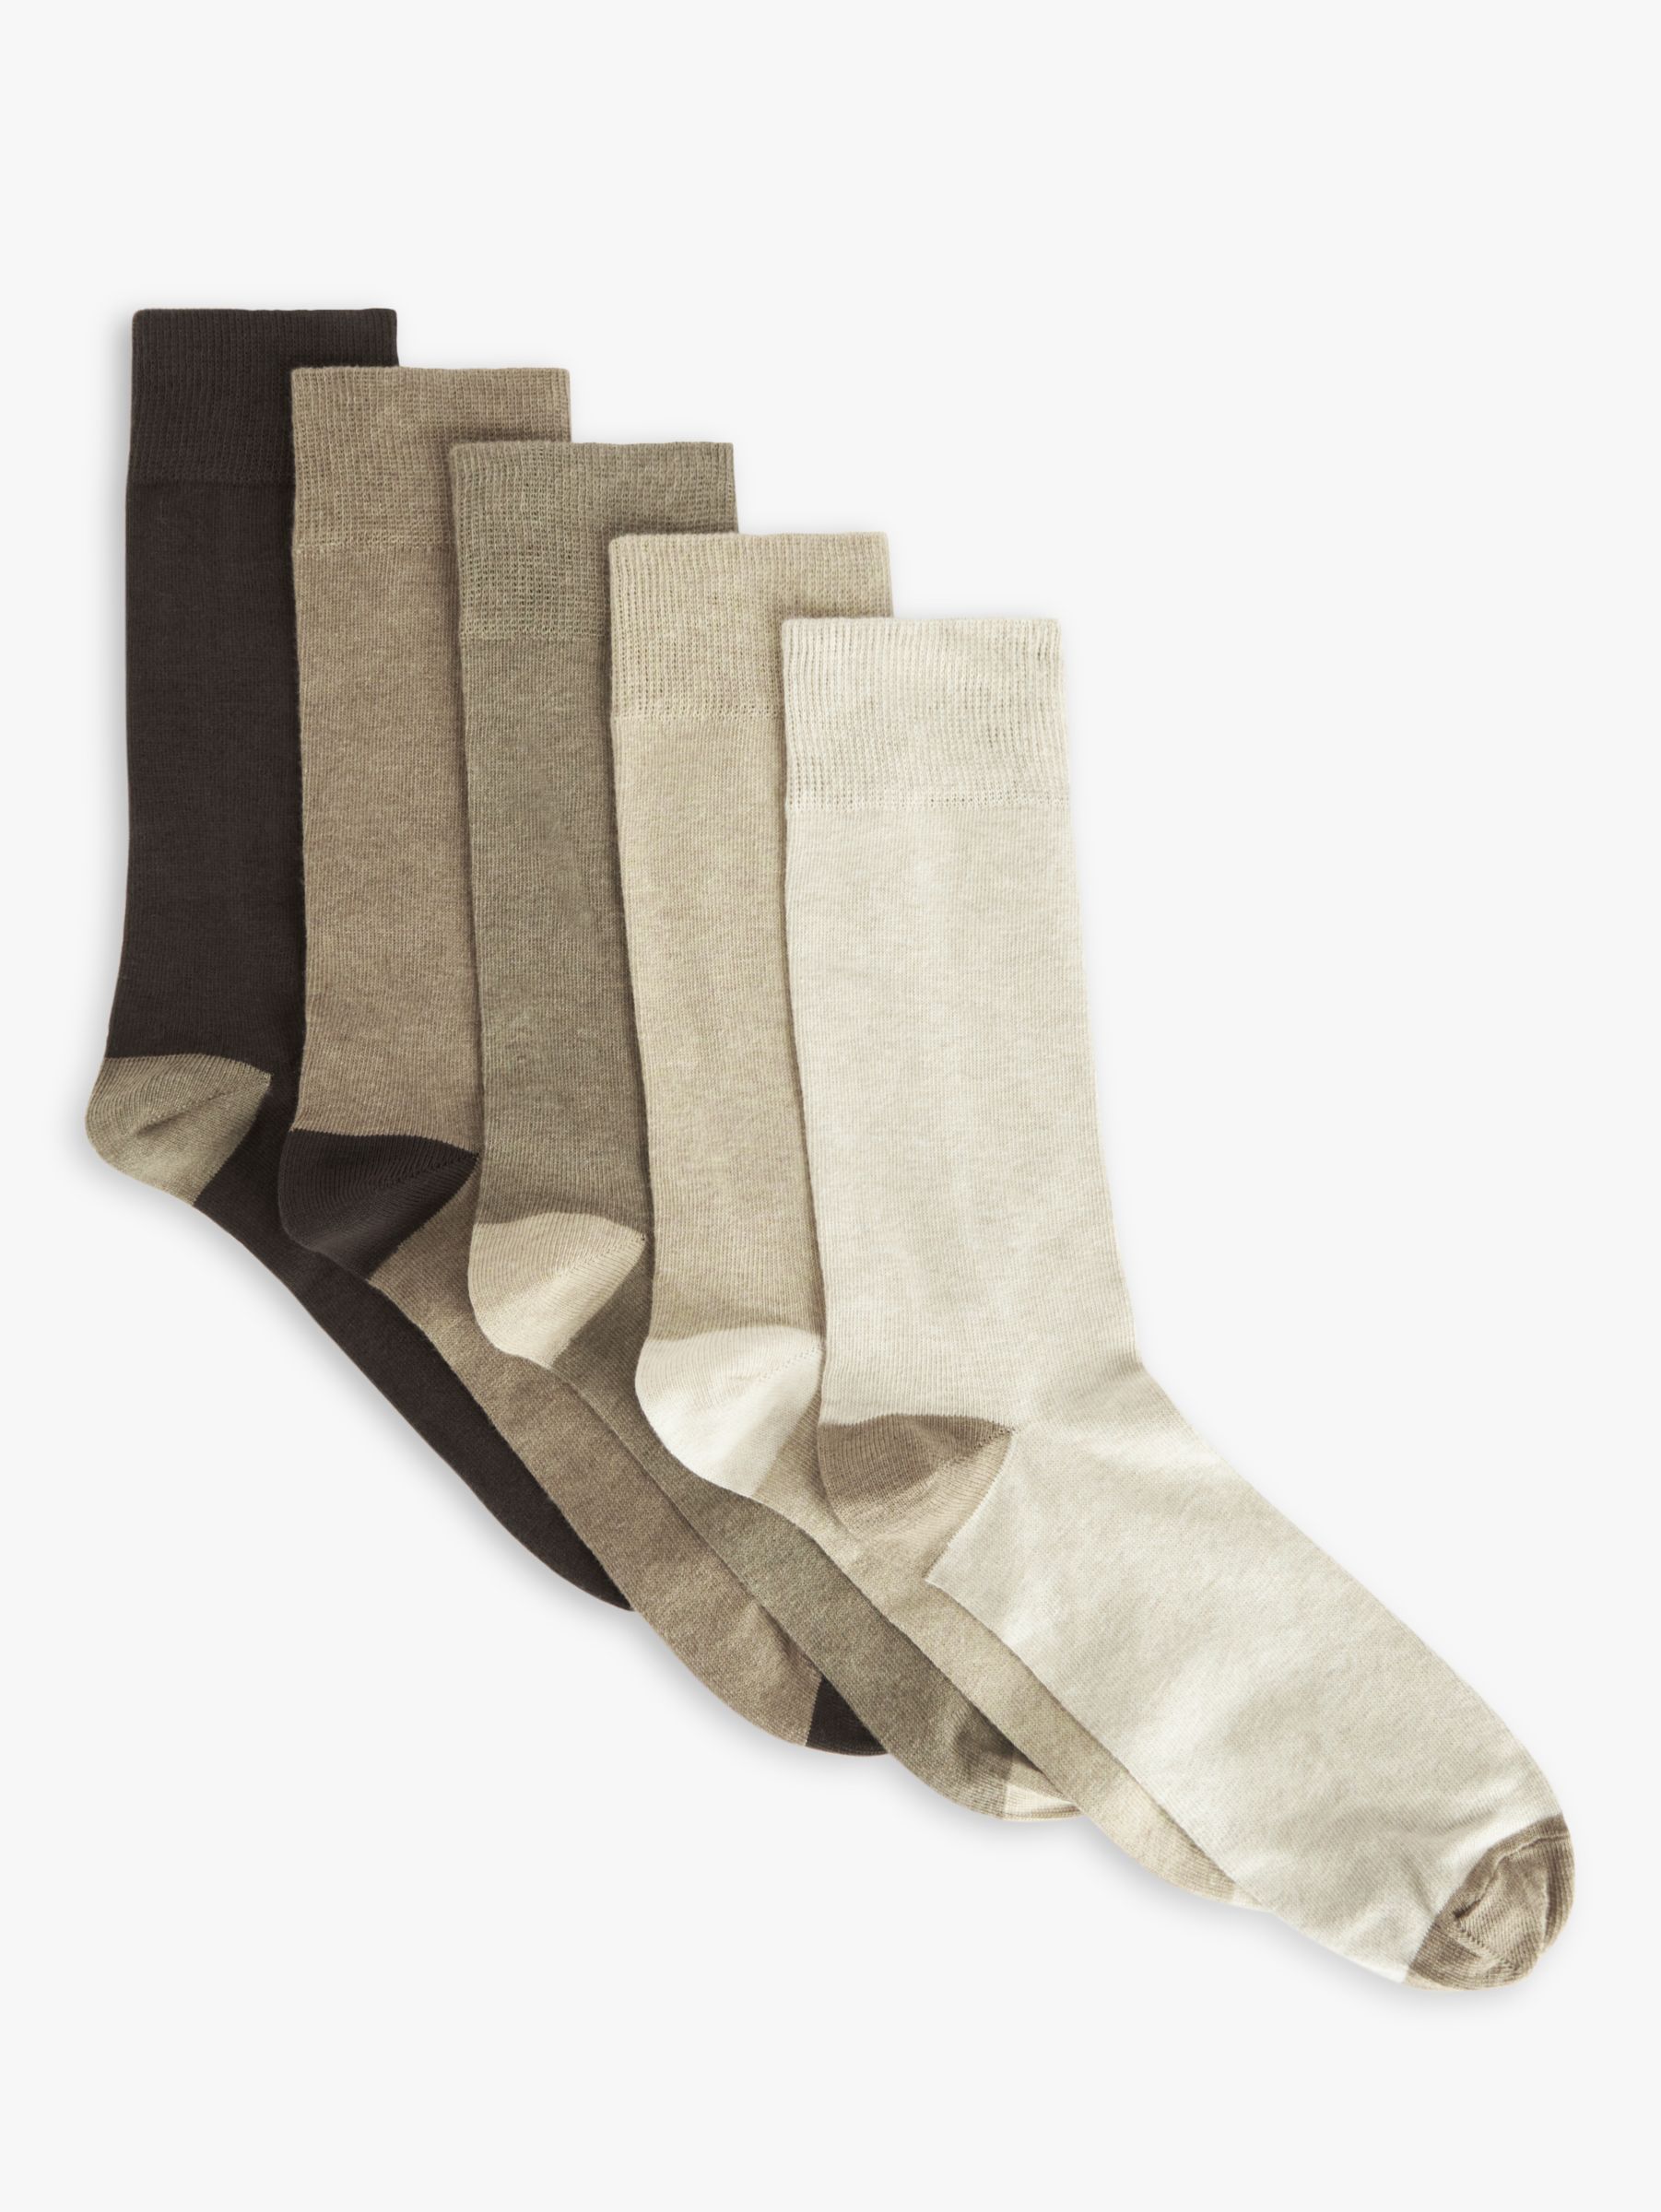 Buy John Lewis Organic Cotton Rich Heel and Toe Men's Socks, Pack of 5 Online at johnlewis.com